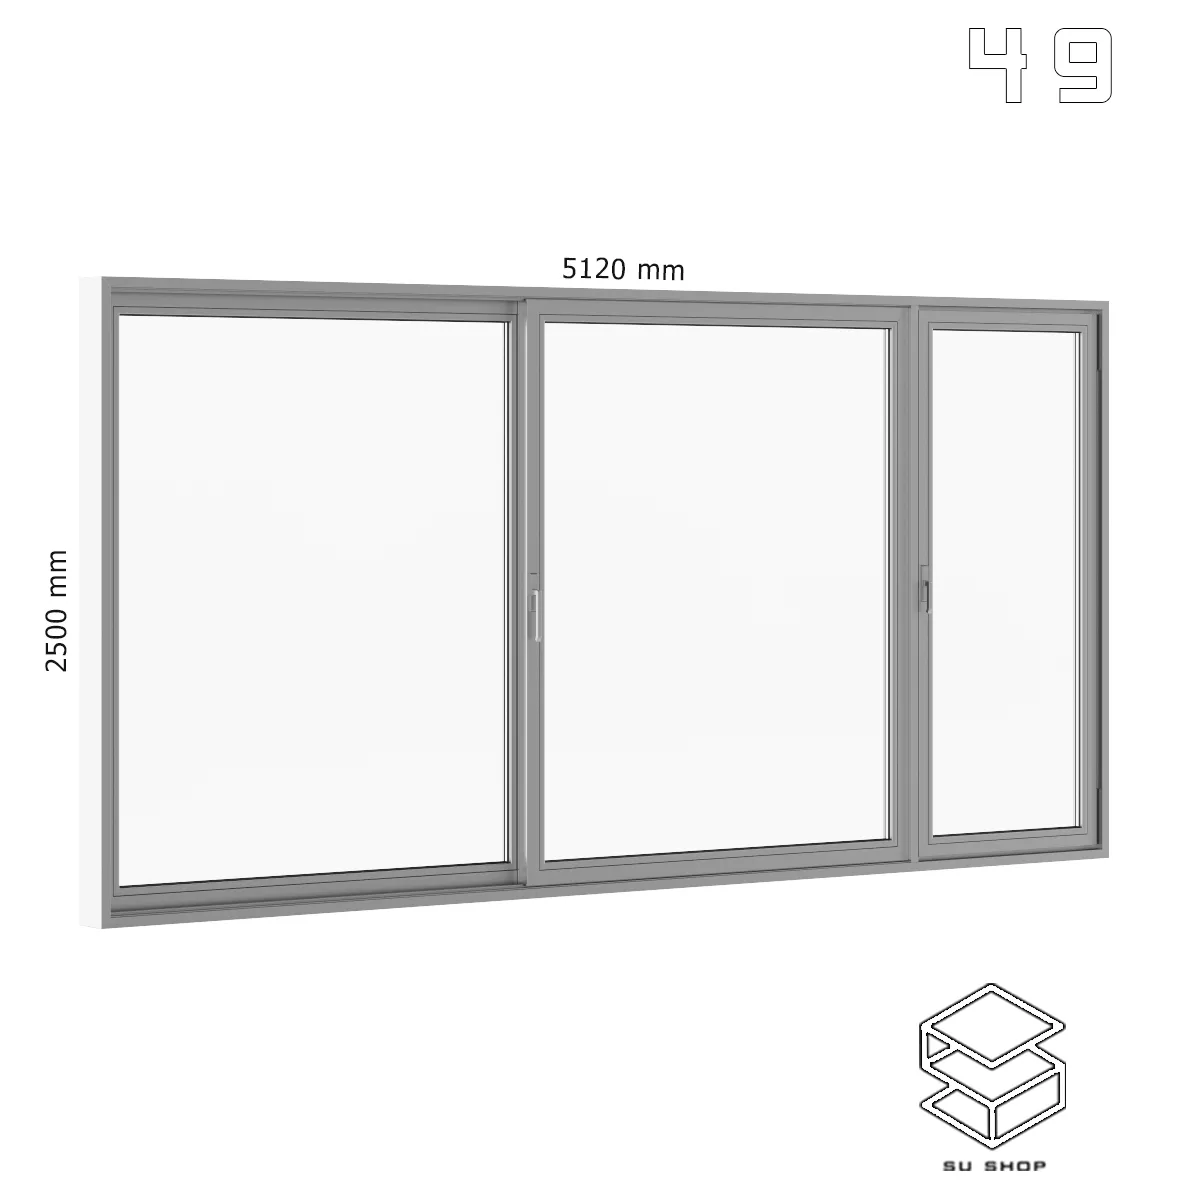 MODERN WINDOWS - SKETCHUP 3D MODEL - VRAY OR ENSCAPE - ID16791